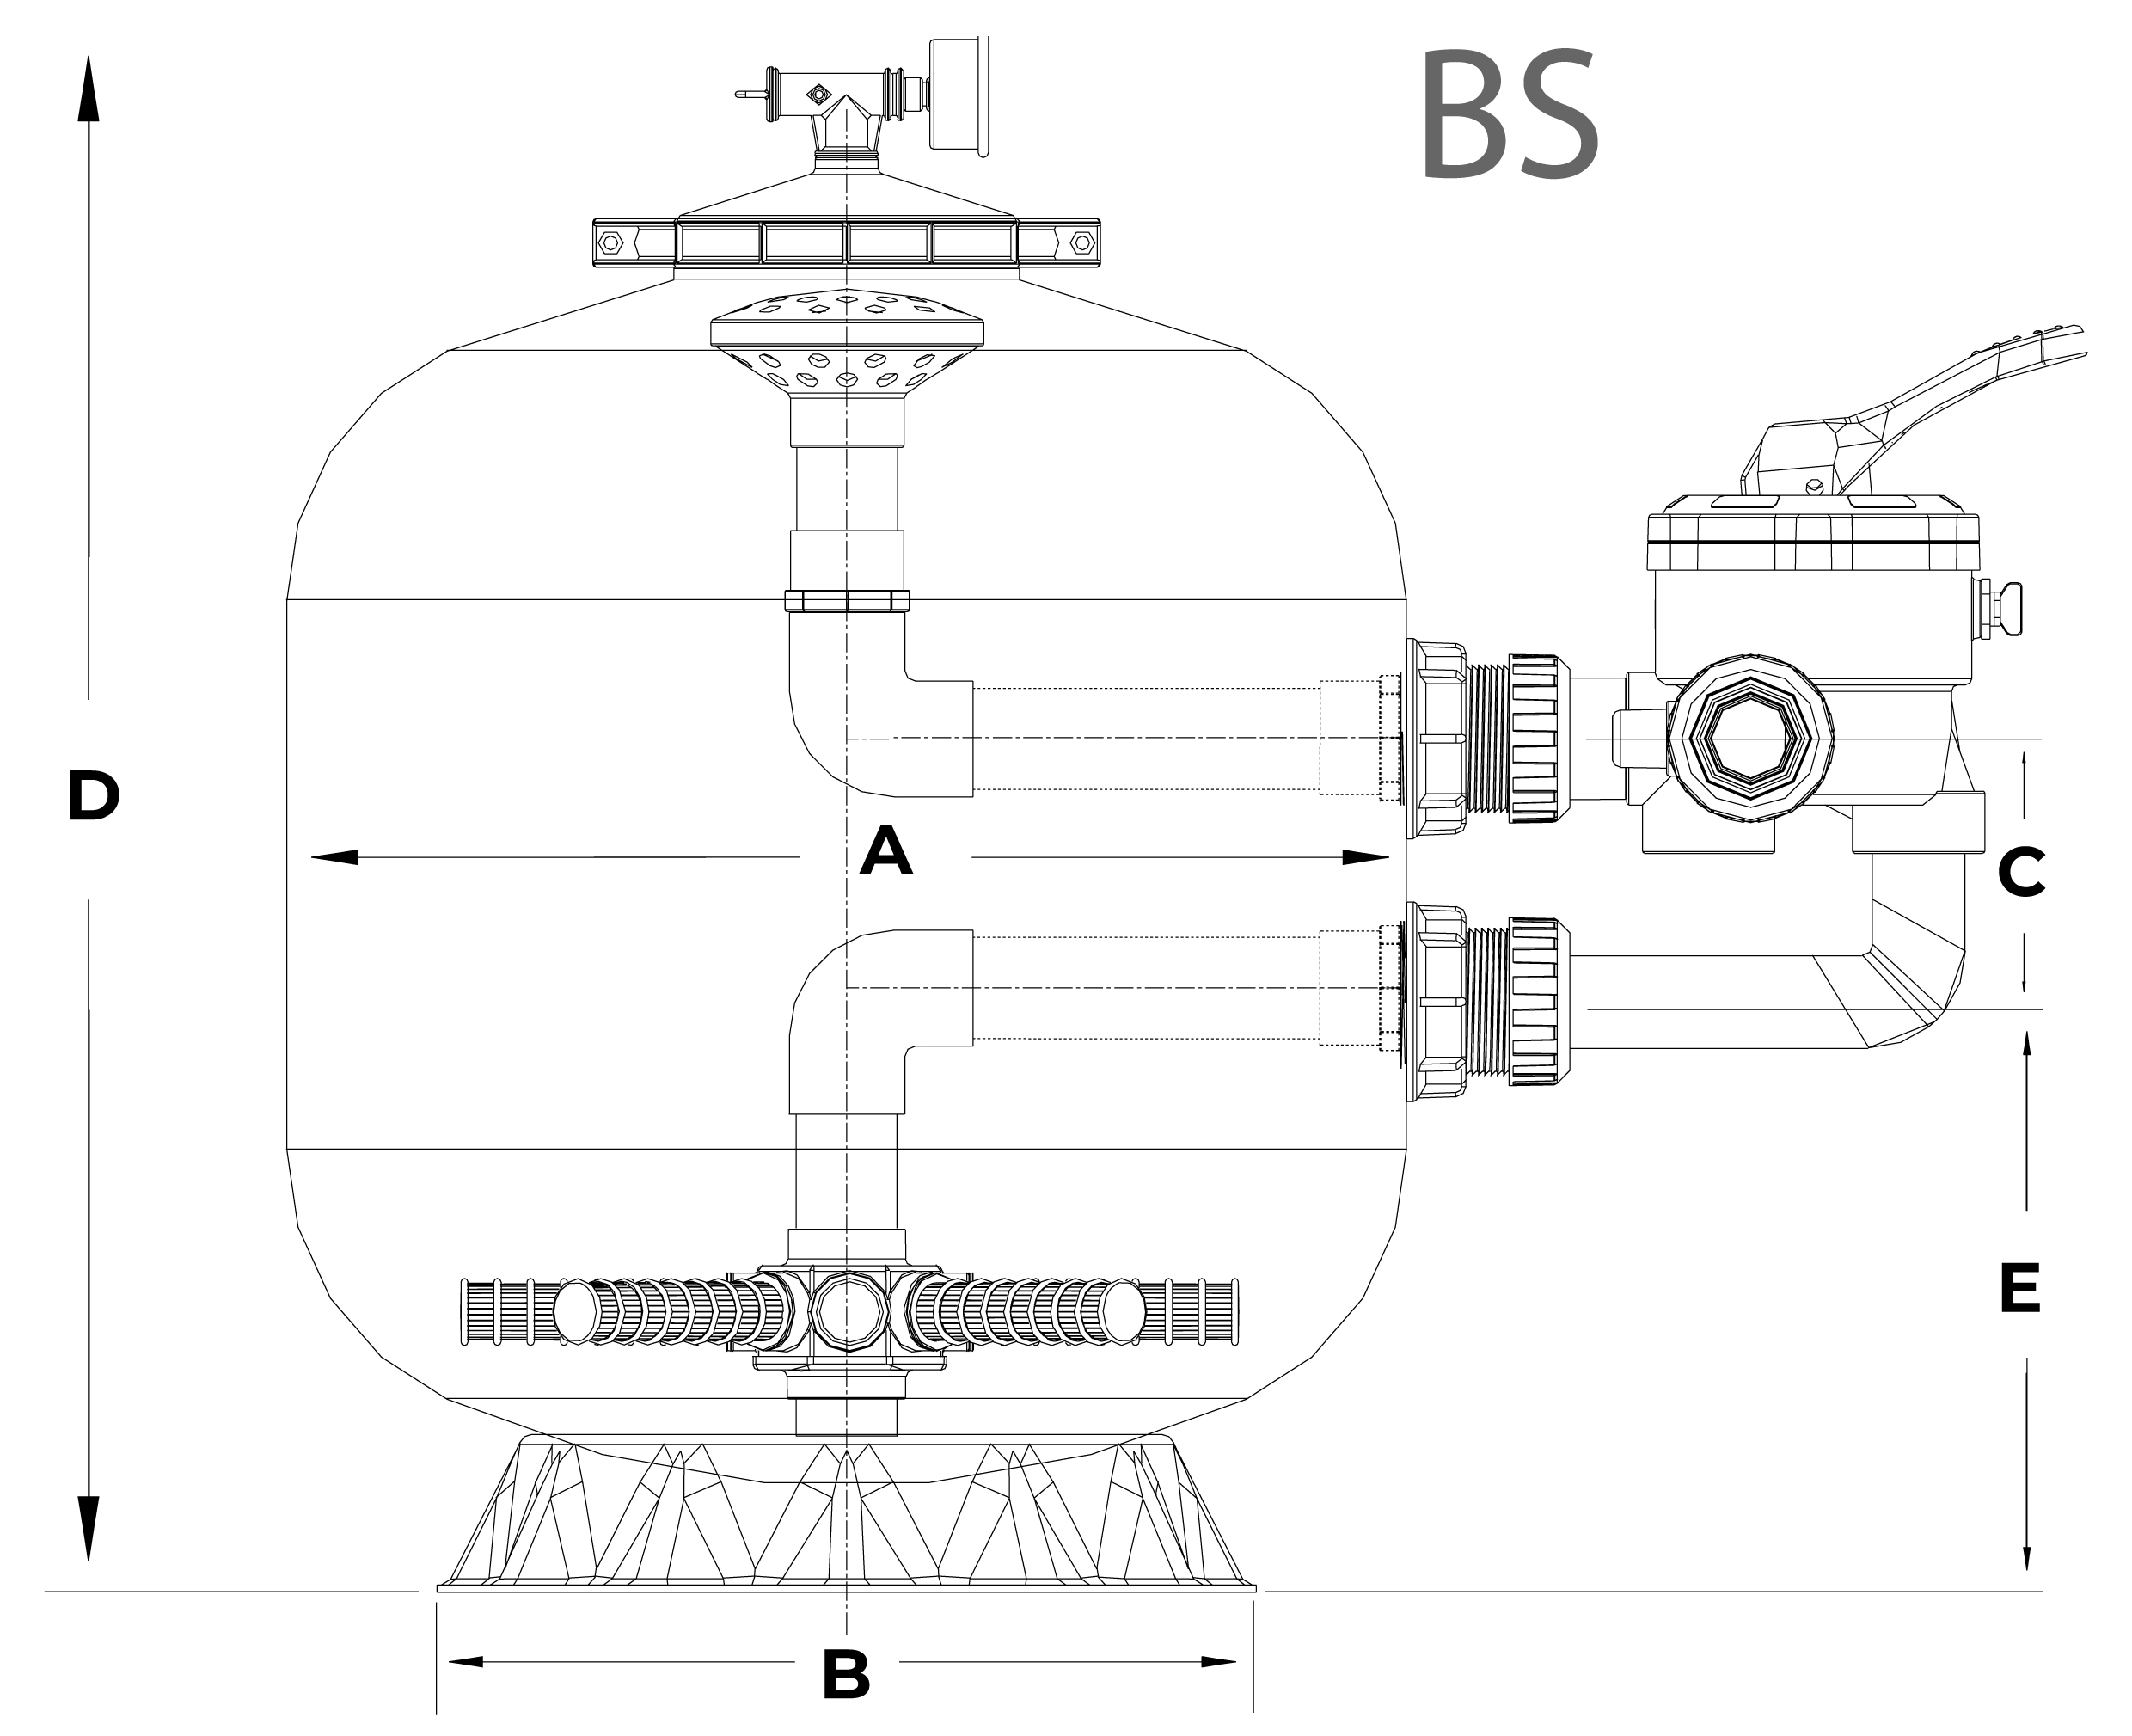 Características técnicas del filtro bobinado BS650